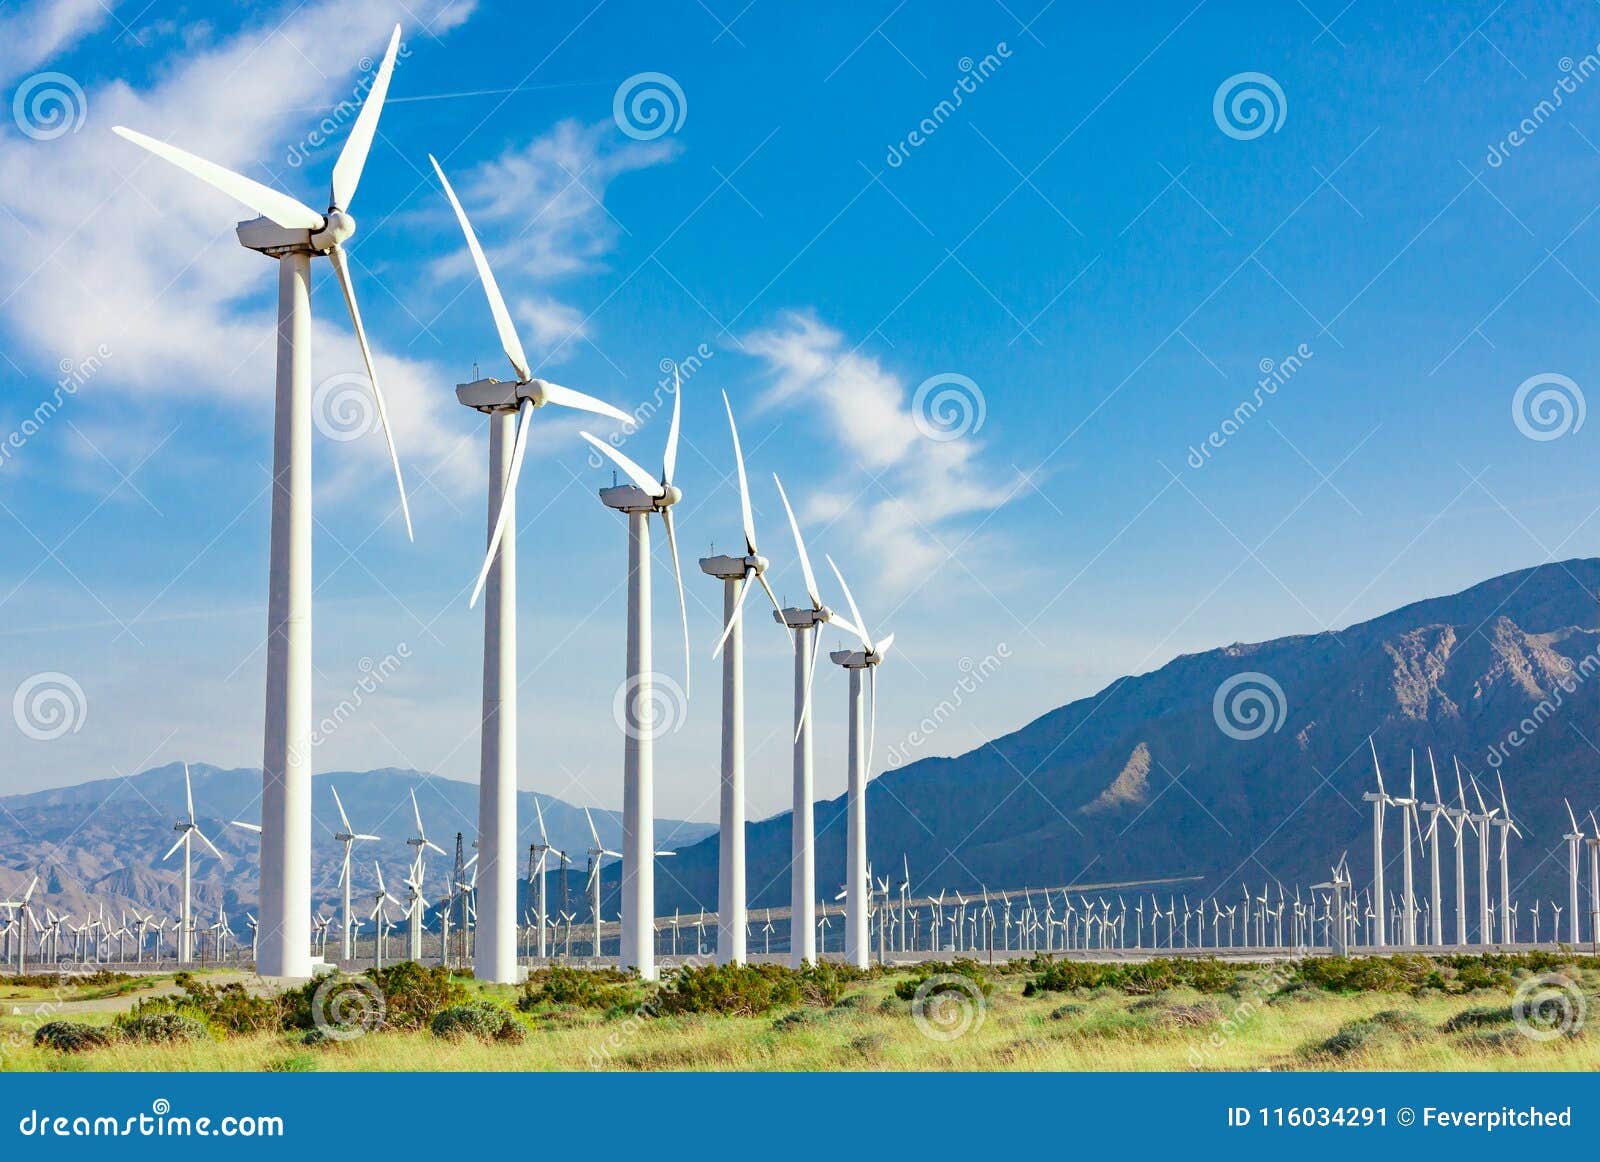 dramatic wind turbine farm in the deserts of california.